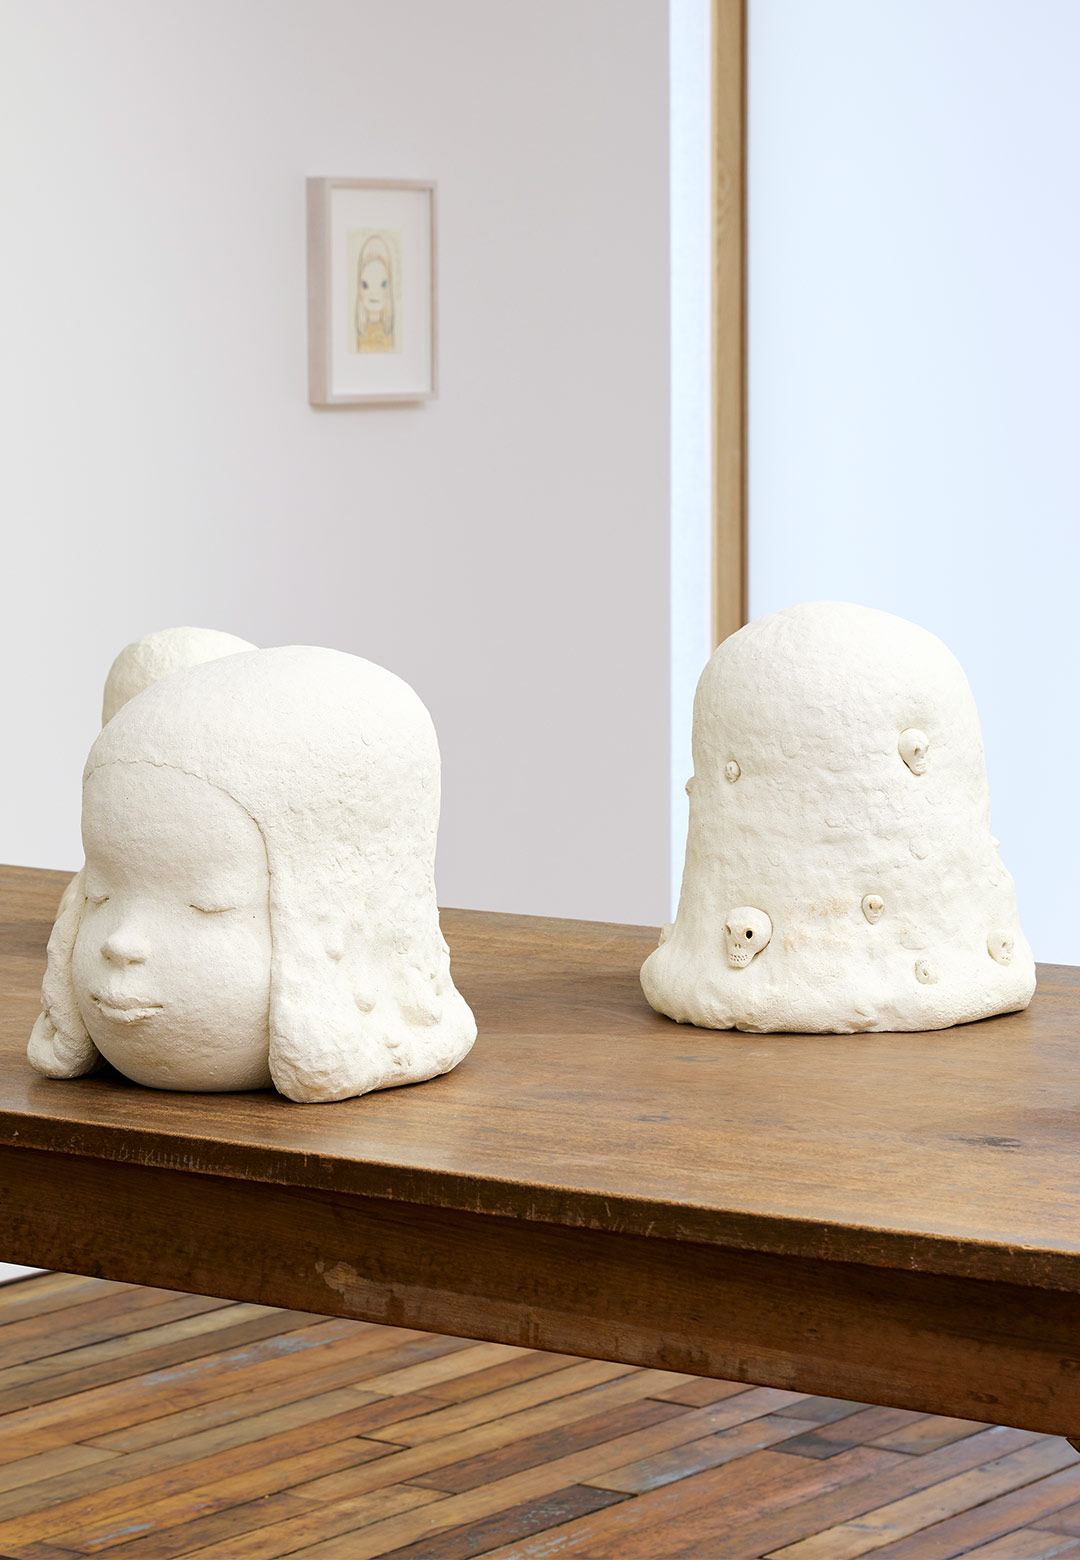 Yoshitomo Nara’s ‘Ceramic Works’ is a mastery of creativity and emotional depth